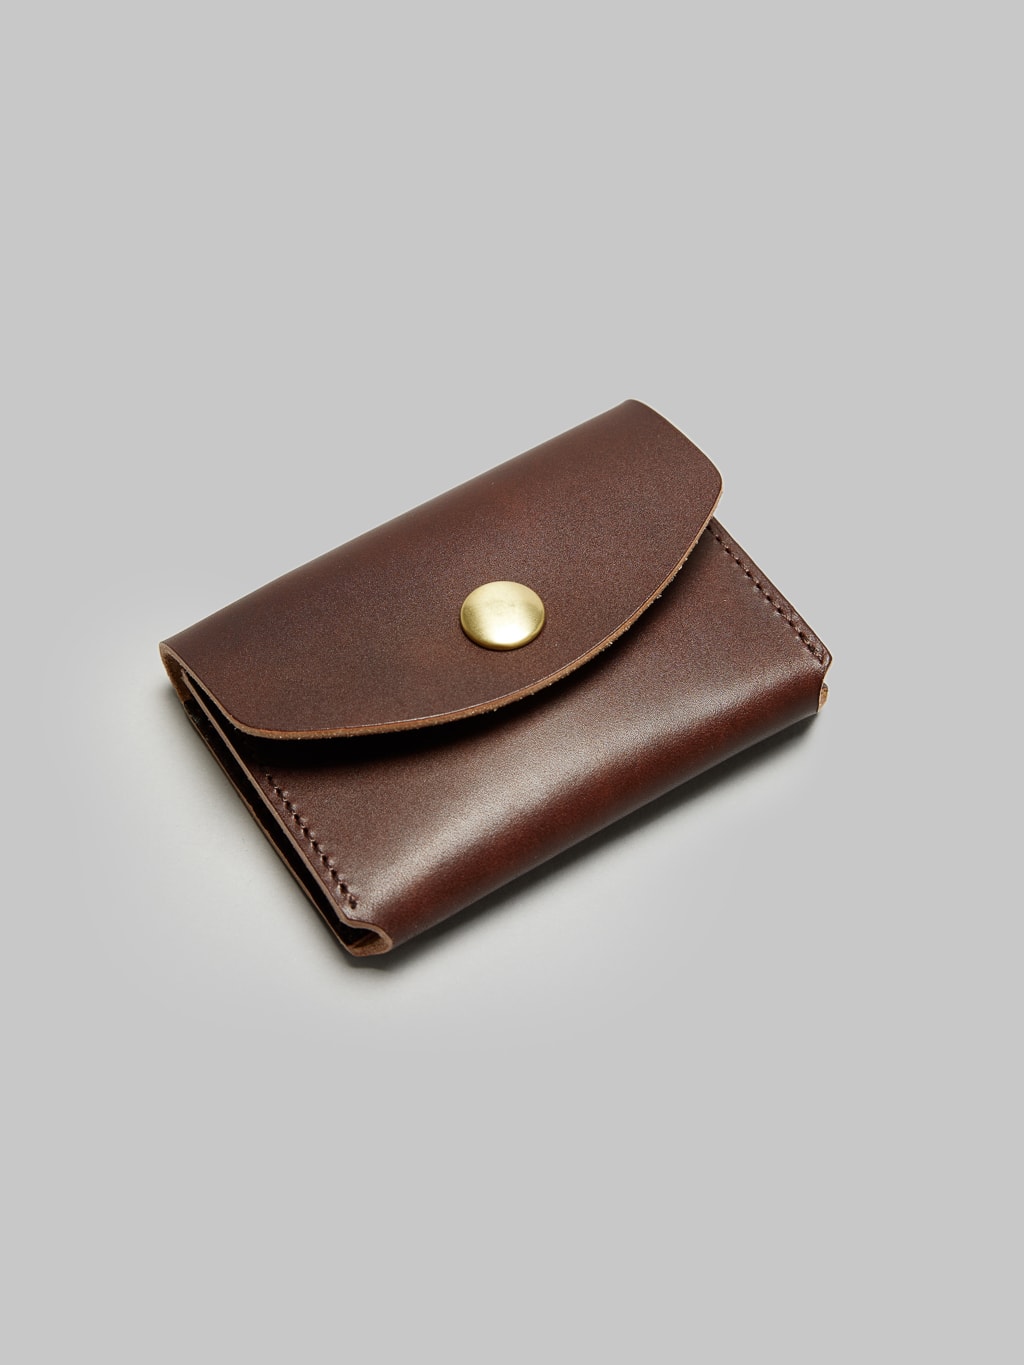 Kobashi Studio Leather Card Case brown vegetal tanned